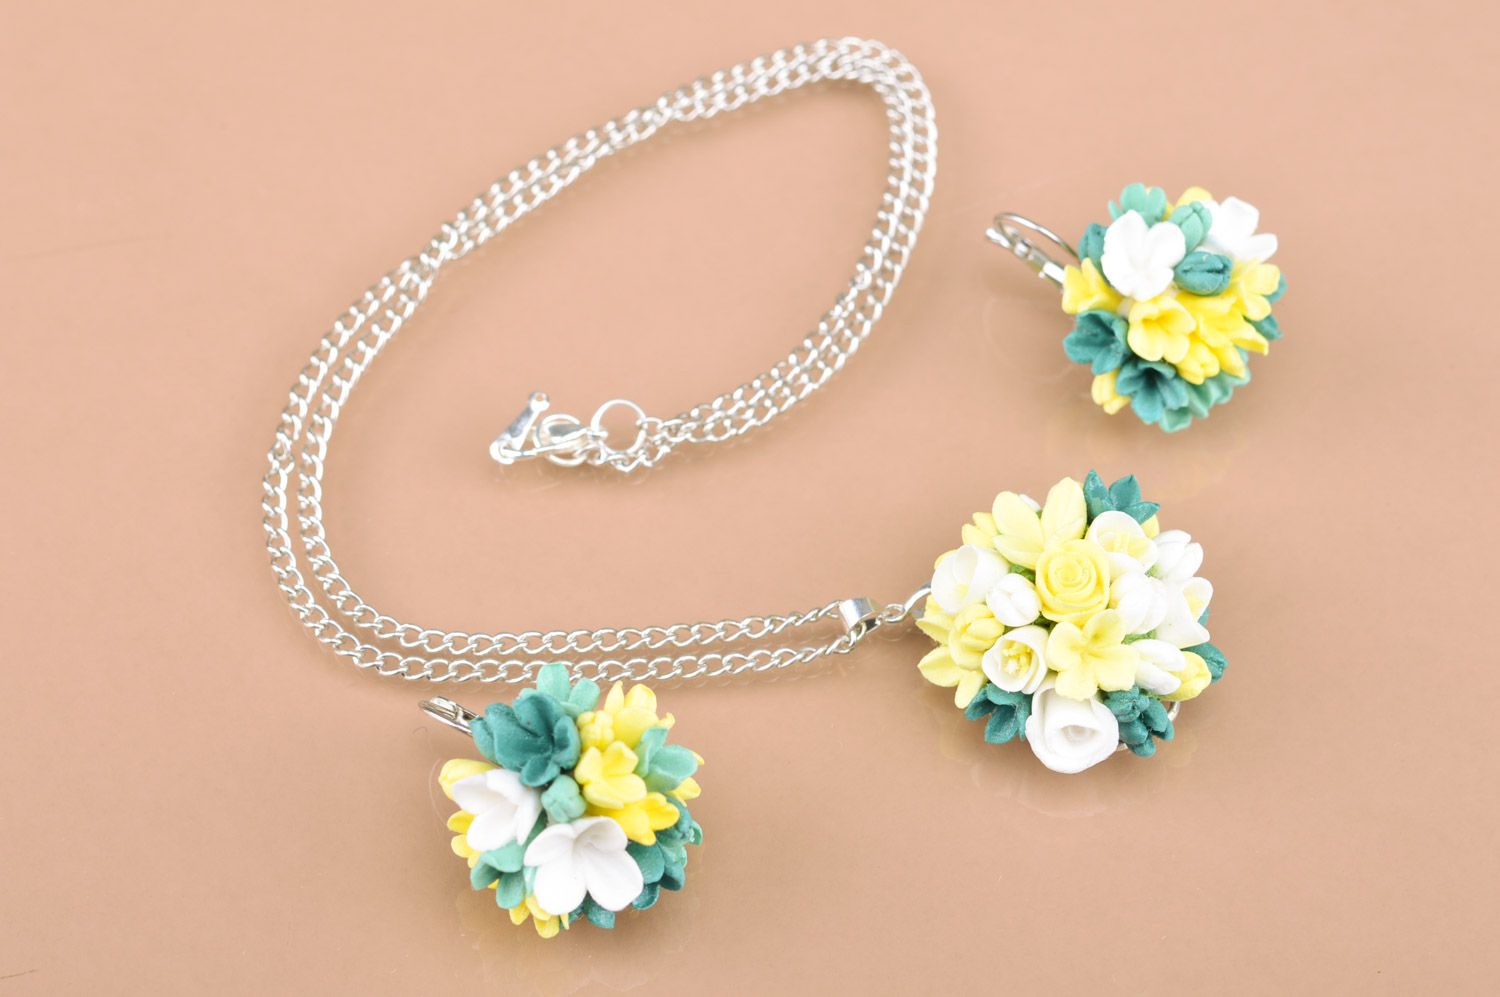 Handmade plastic flower jewelry set 2 items yellow earrings and pendant photo 1